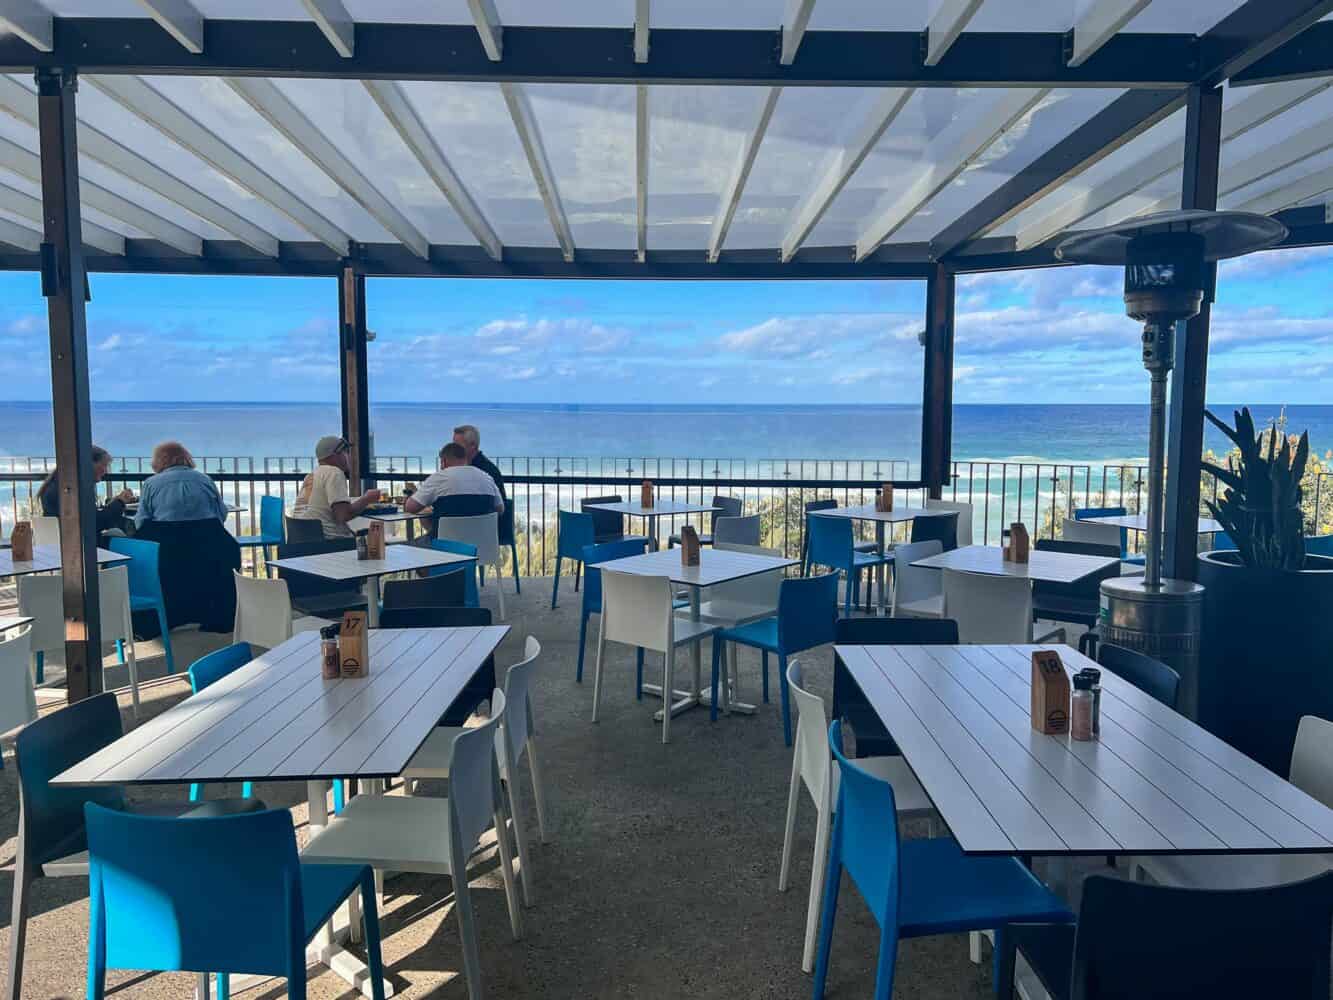 Sunshine Beach Surf Club is one of the best restaurants in Noosa for ocean views.